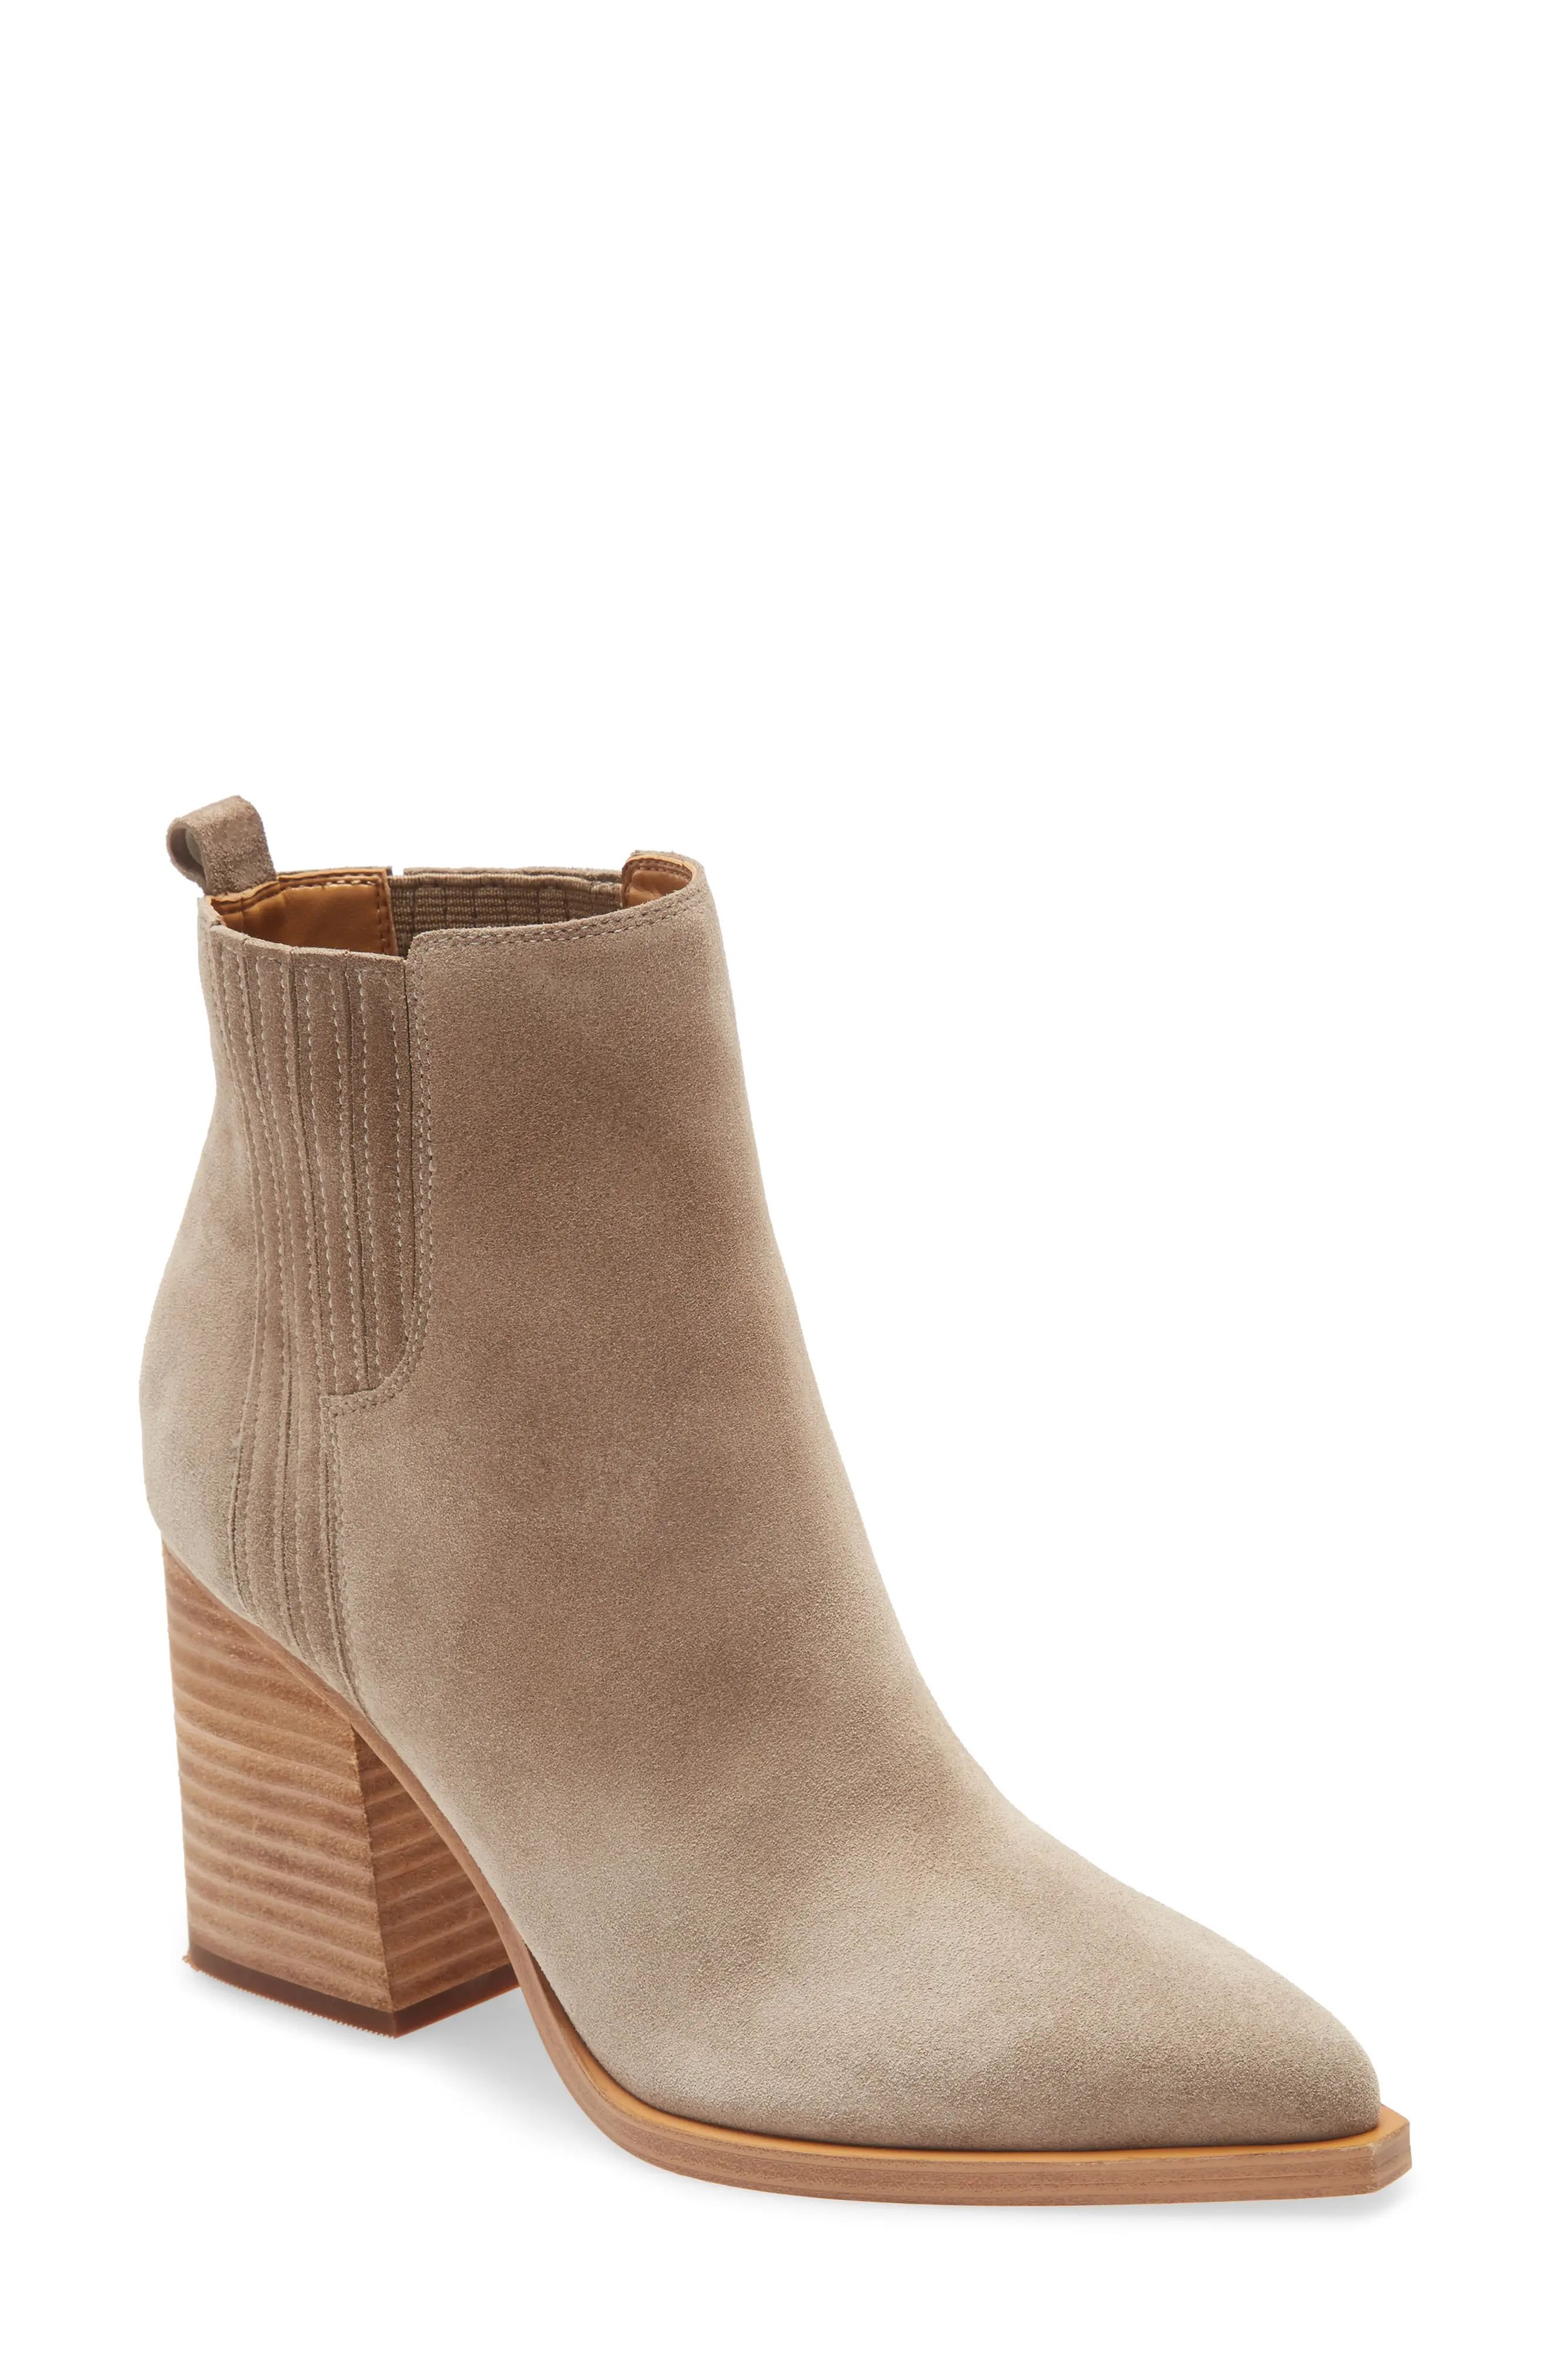 Women's Marc Fisher Ltd Oshay Pointed Toe Bootie, Size 9 M - Beige | Nordstrom